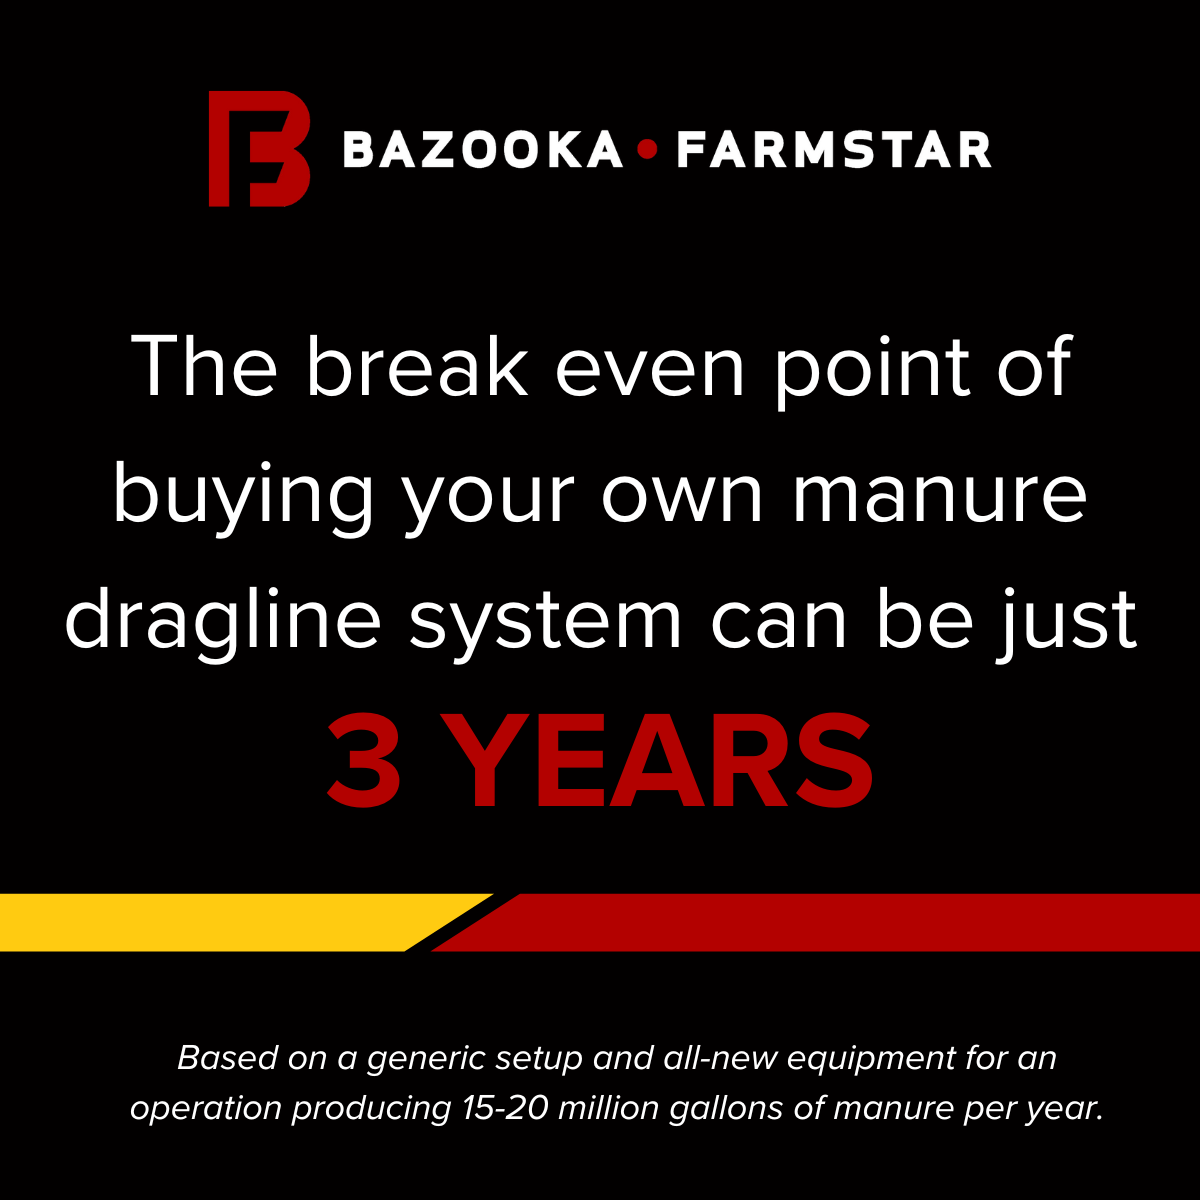 Bazooka Breakeven manure dragline system ROI